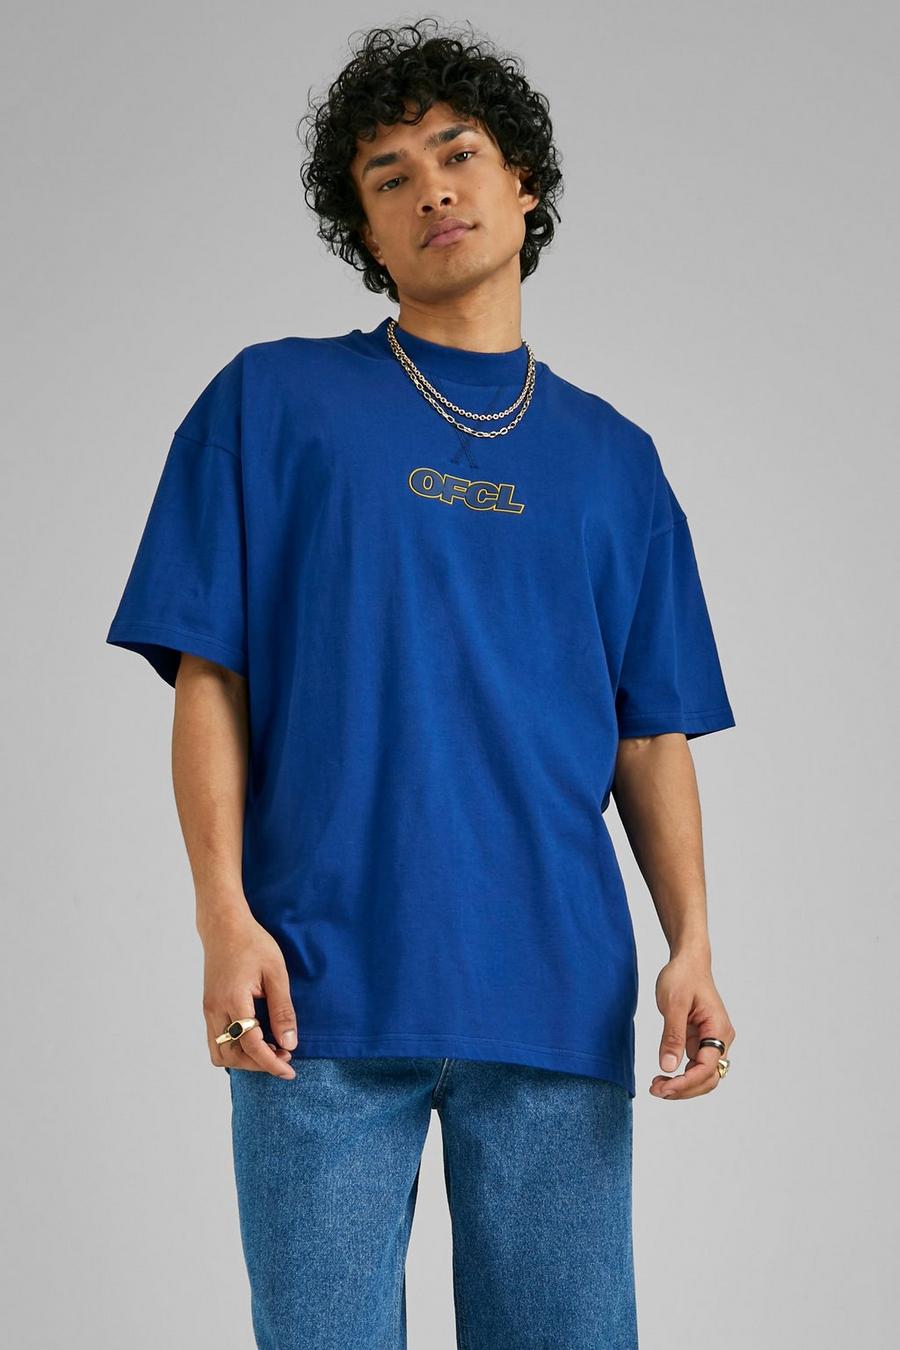 Camiseta oversize Ofcl gruesa, Navy azul marino